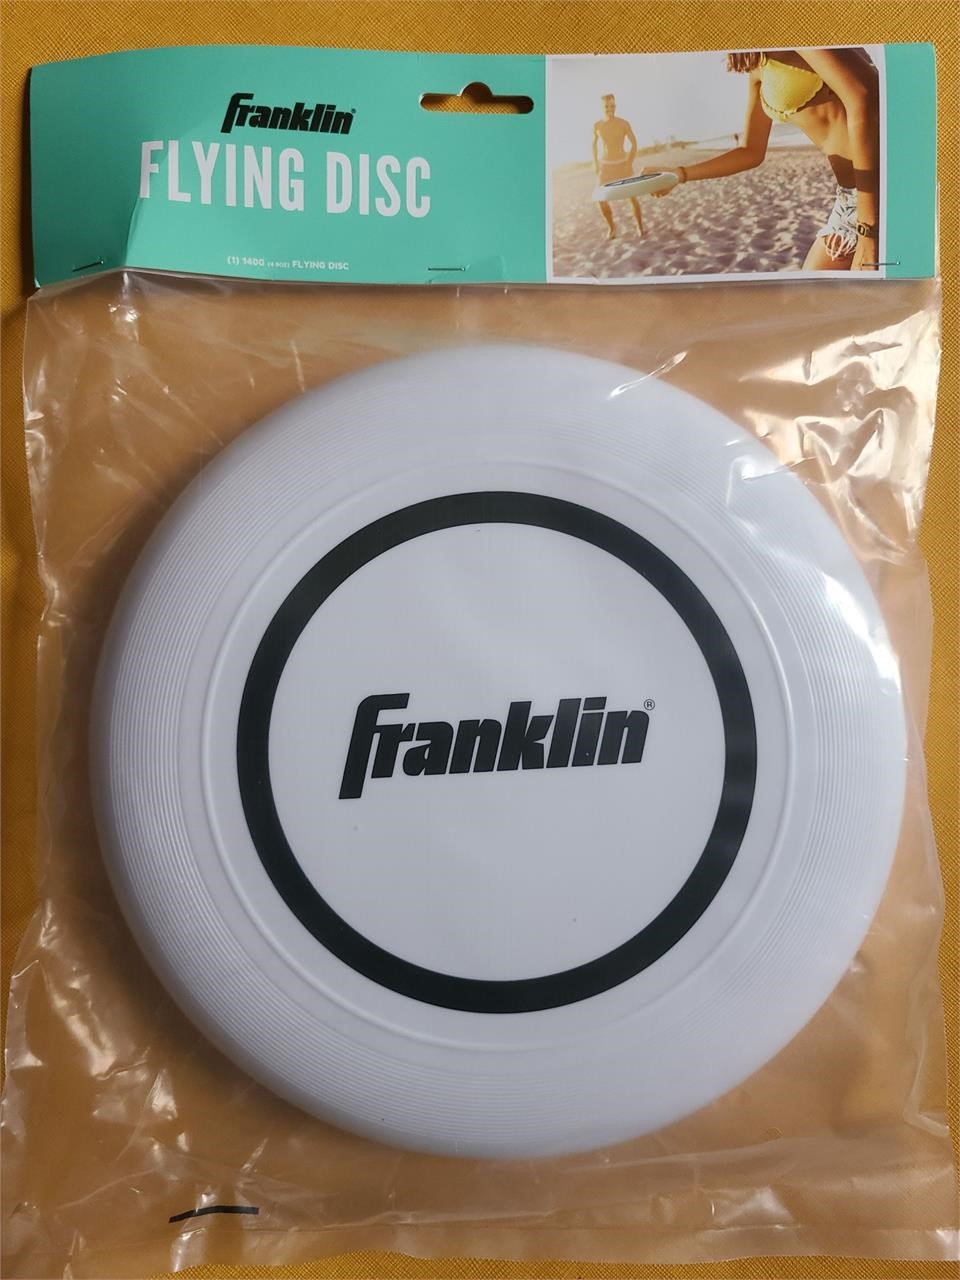 Frqnklin Flying Disc